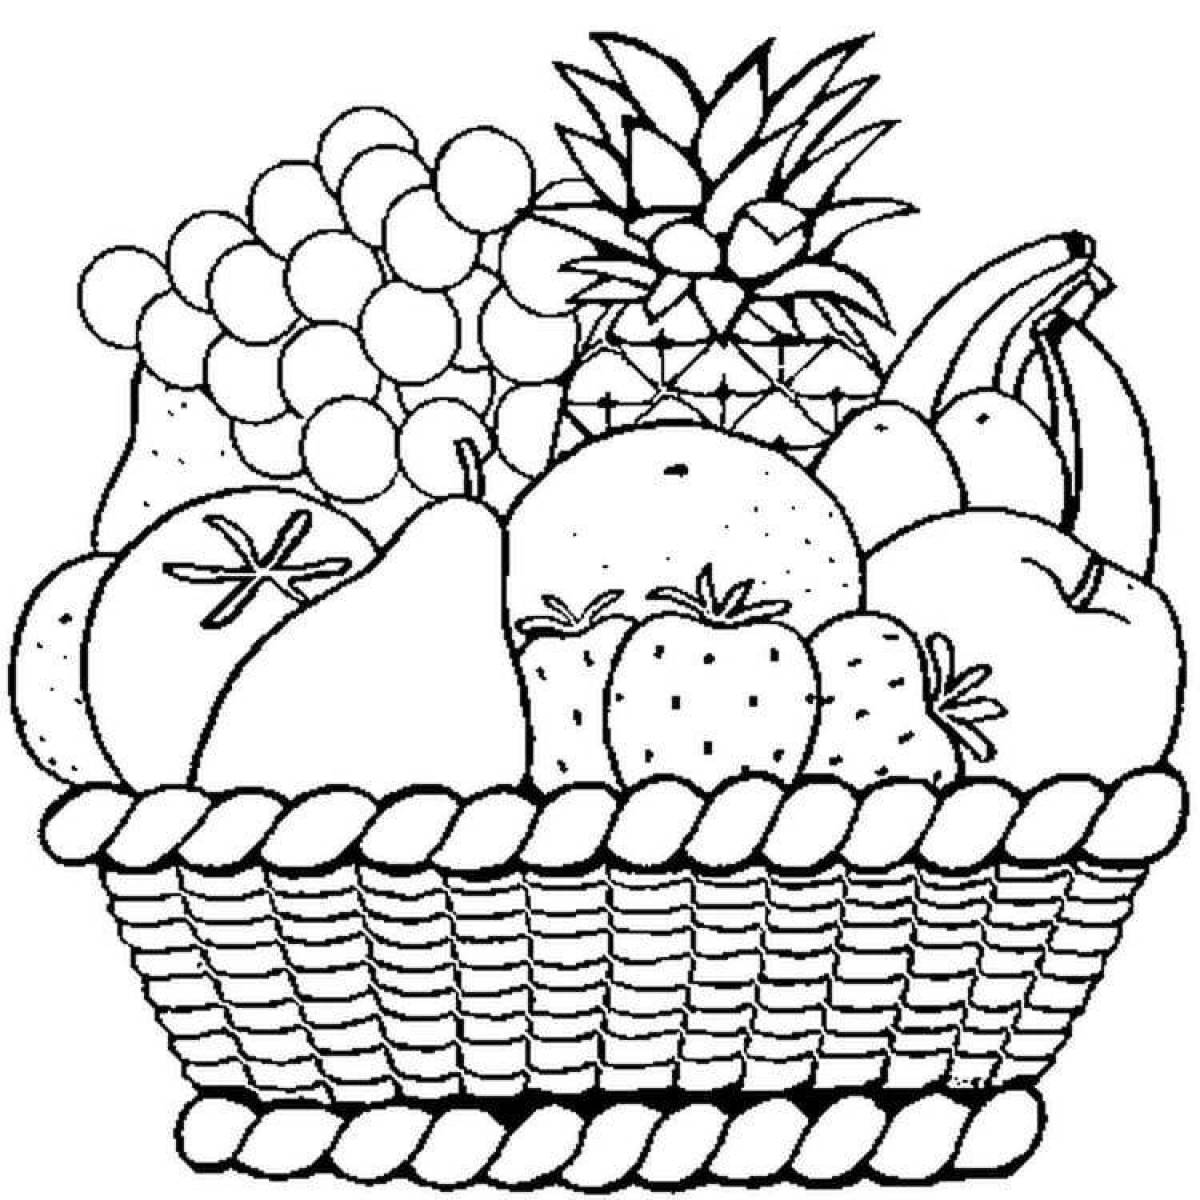 Coloring book funny fruit basket